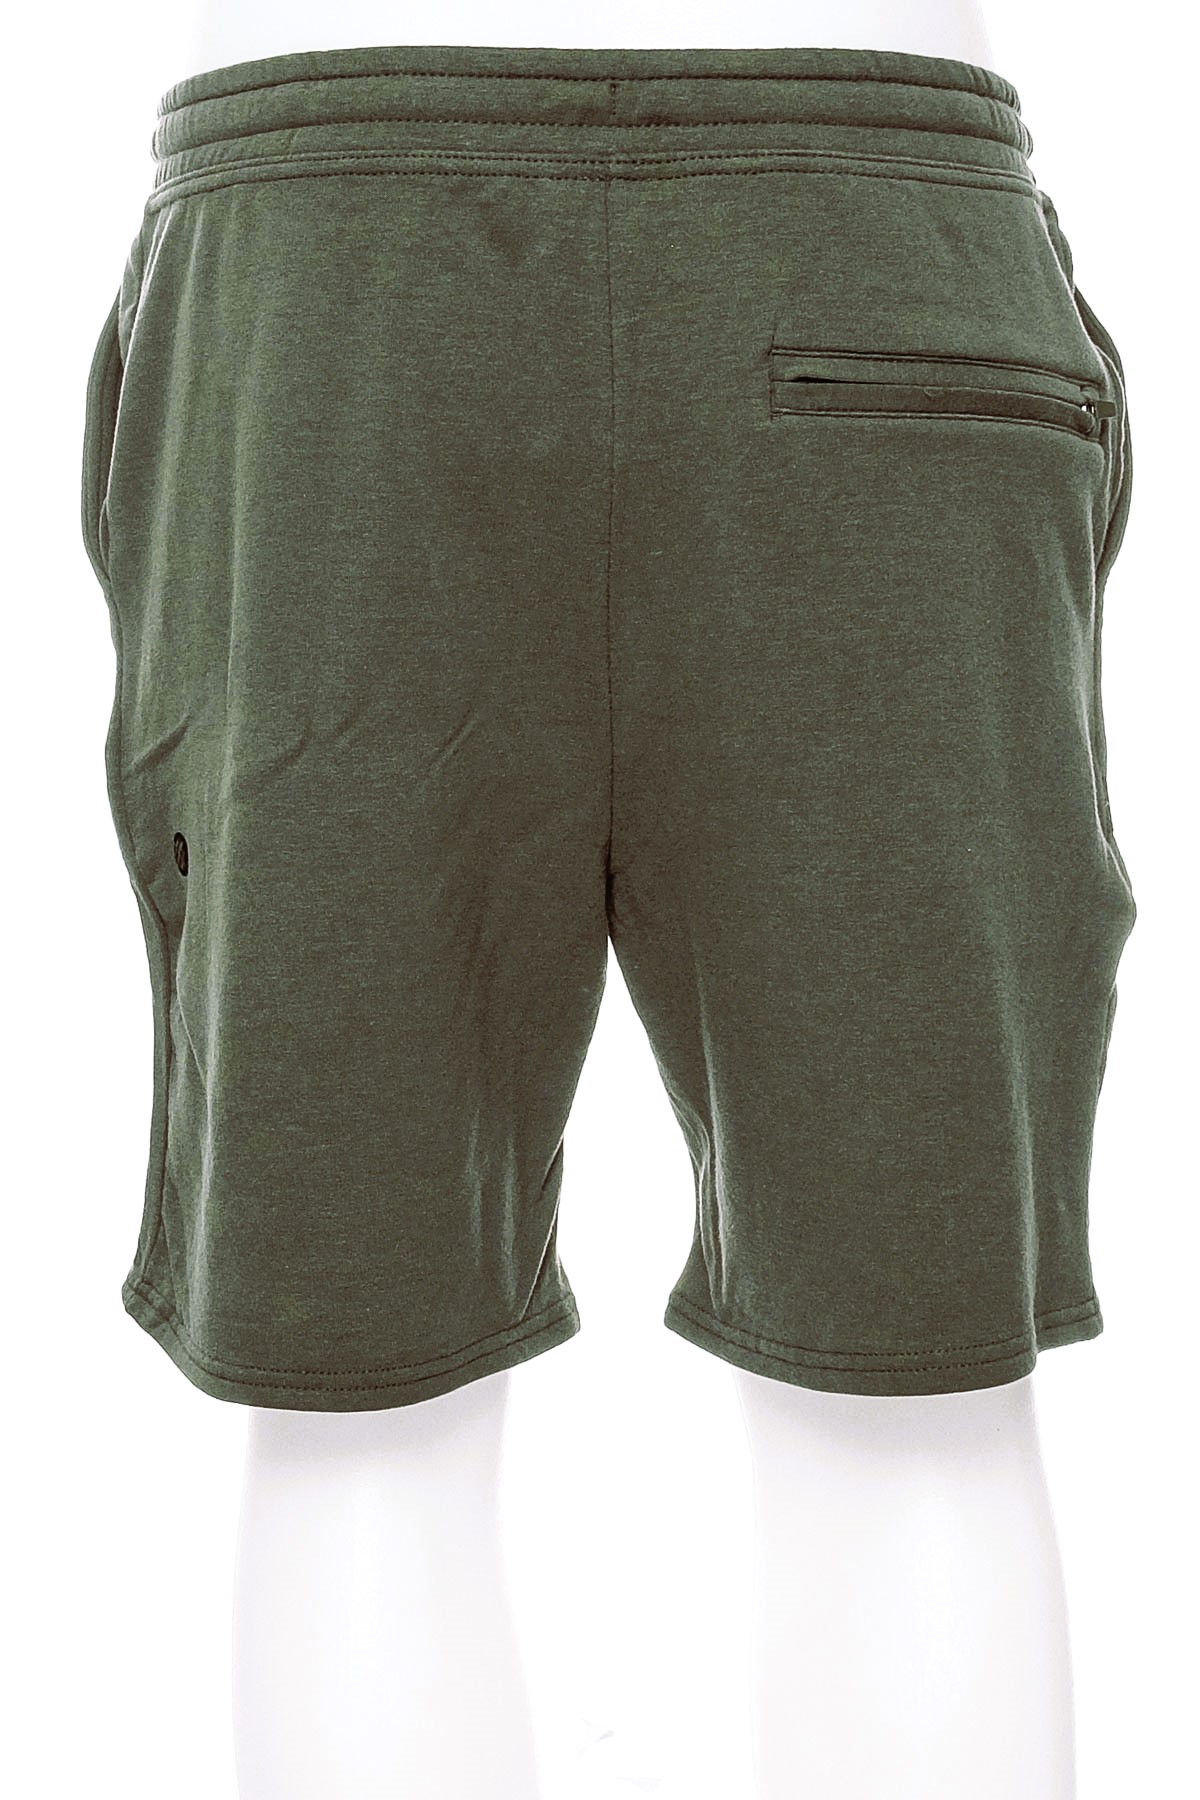 Men's shorts - Stance - 1